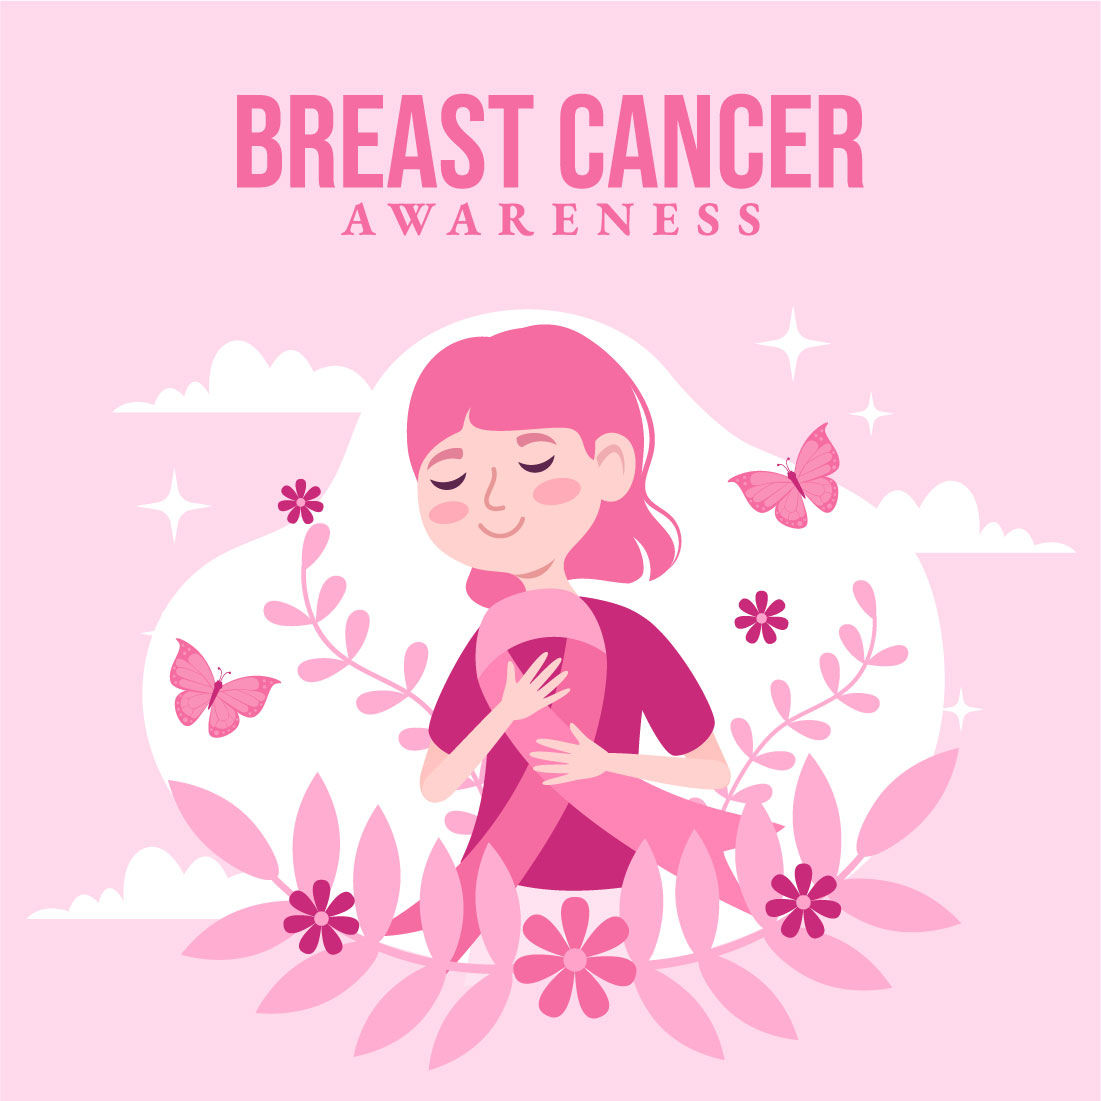 15 Breast Cancer Awareness Month Illustration cover image.